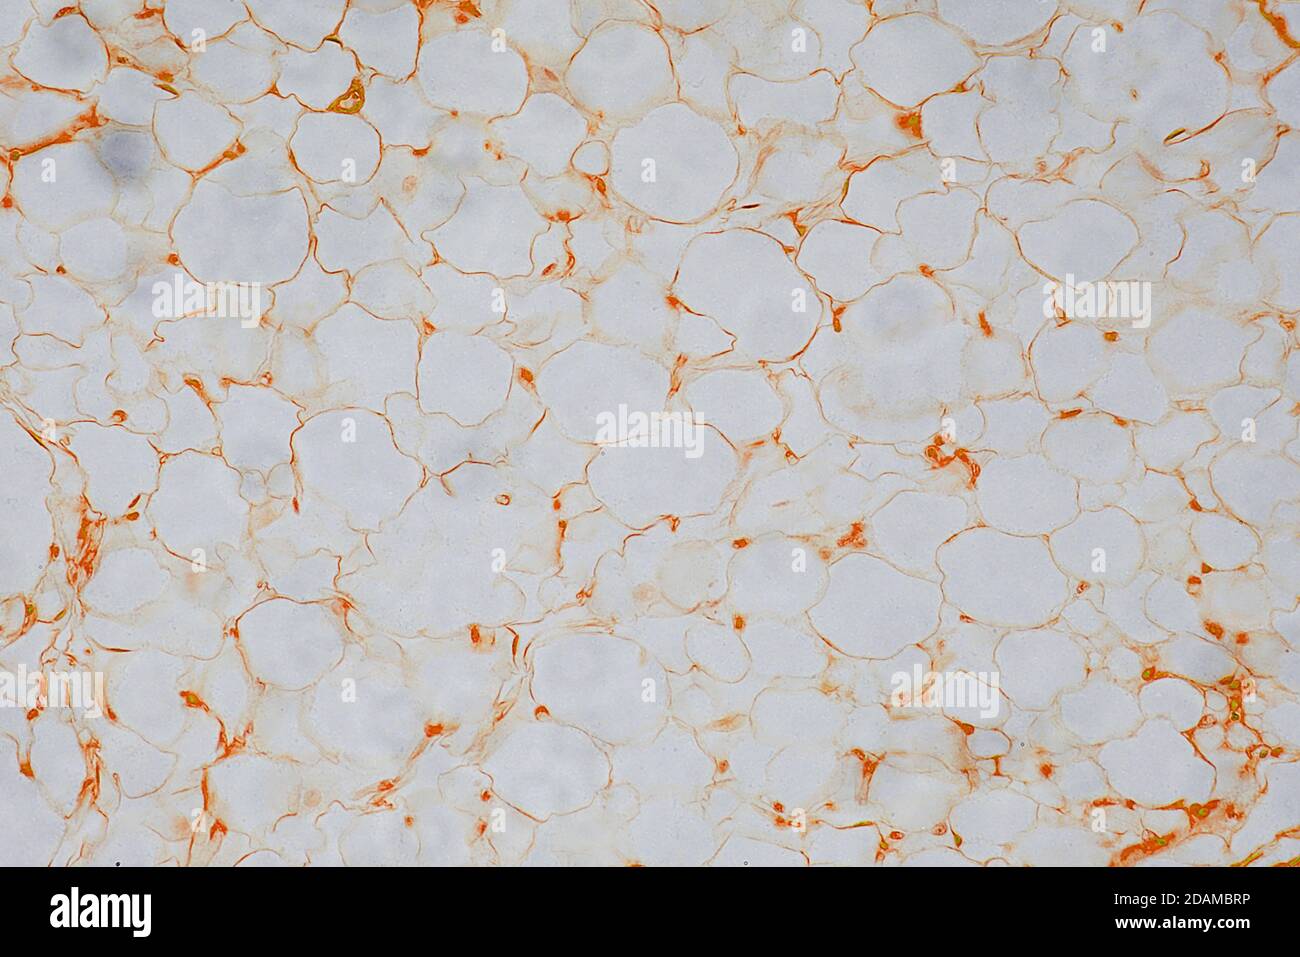 Human fat cells, light micrograph. Stock Photo